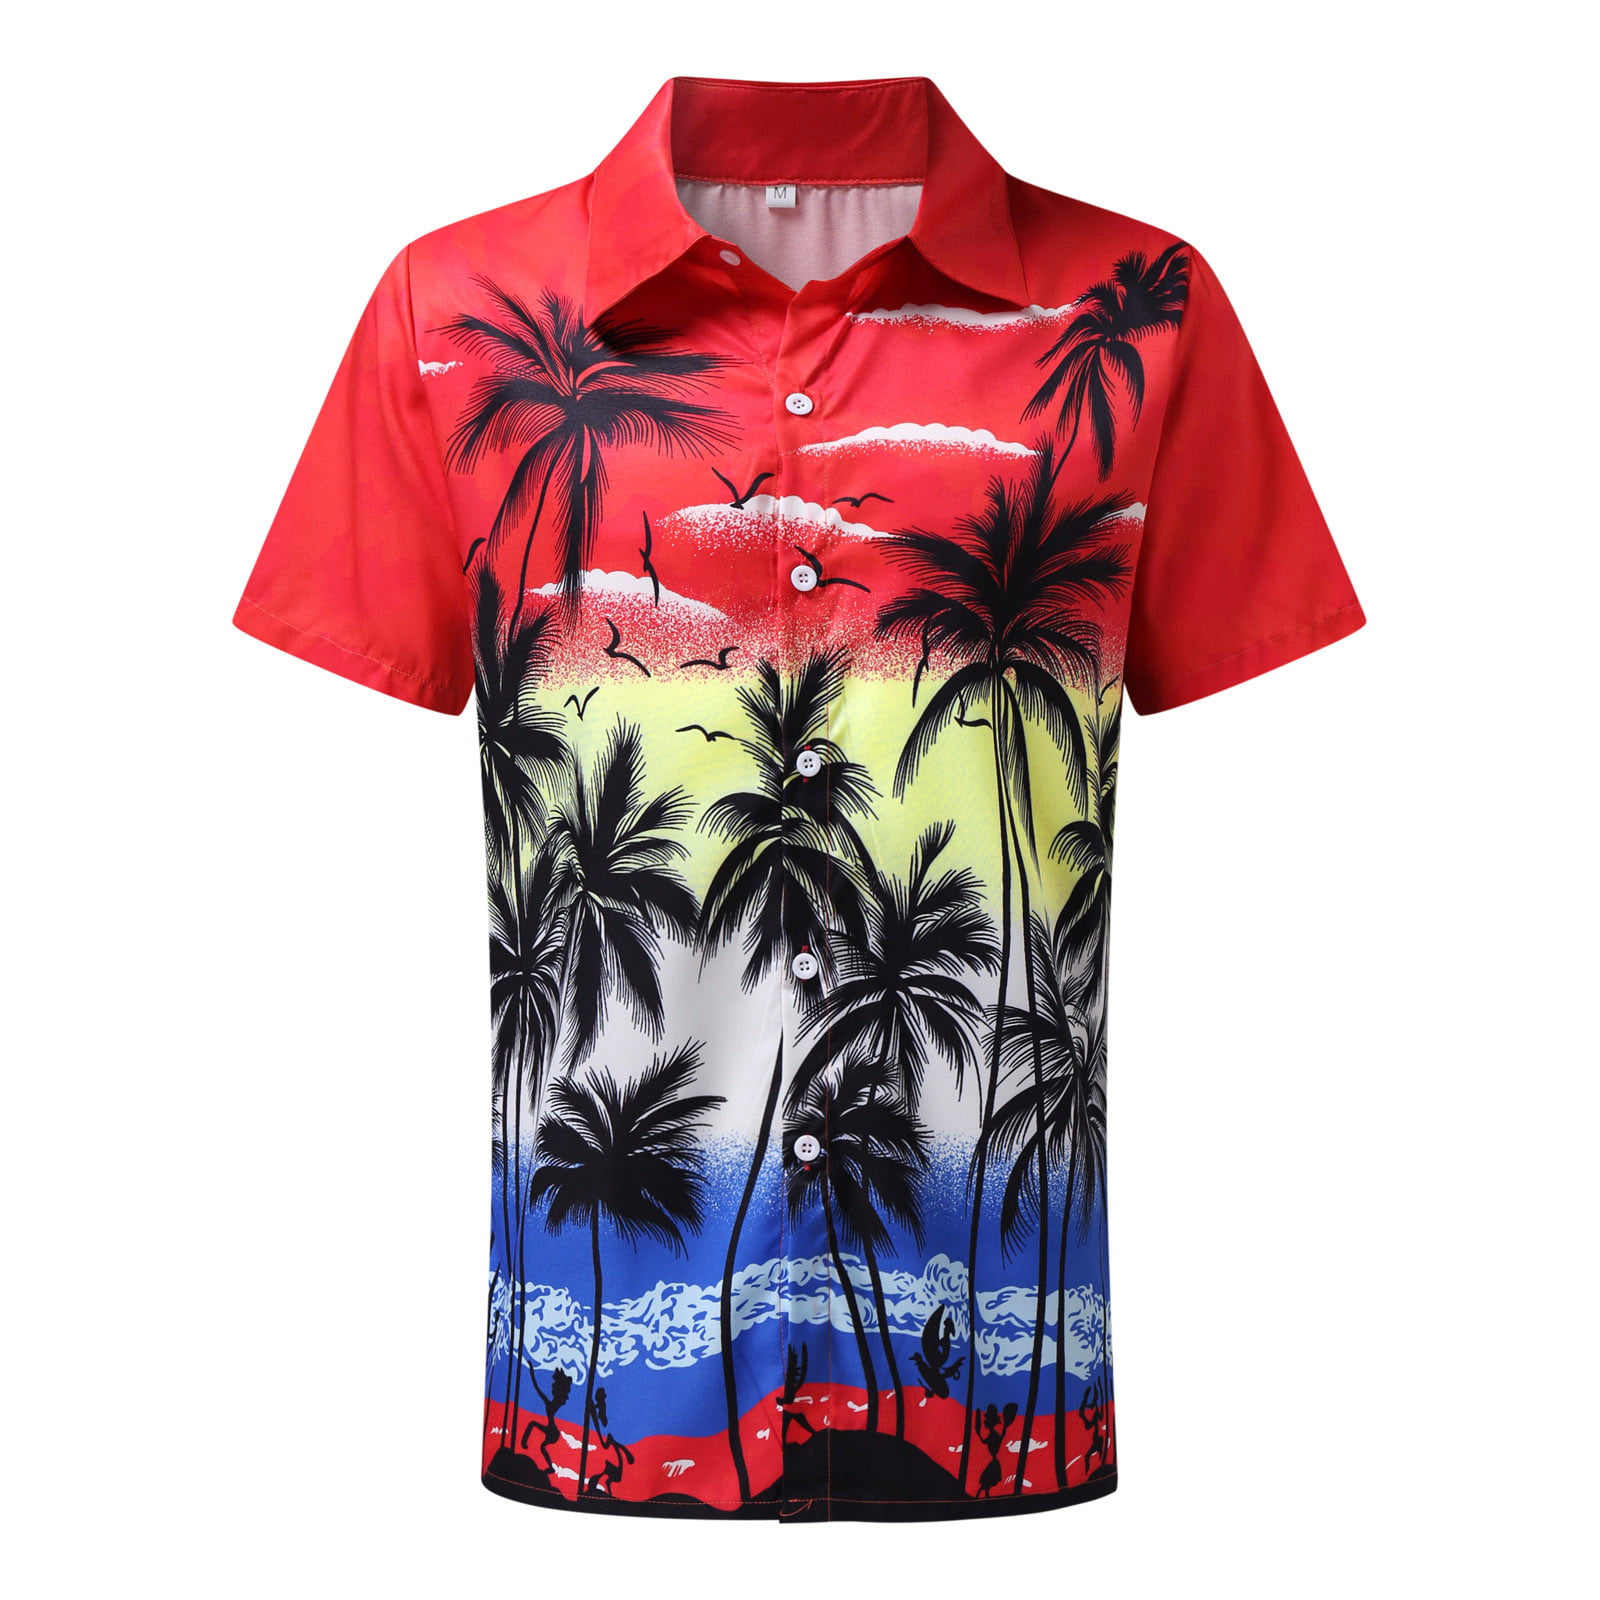 Lojito Men Summer Fashion Top Shirt Seaside Leisure Beach